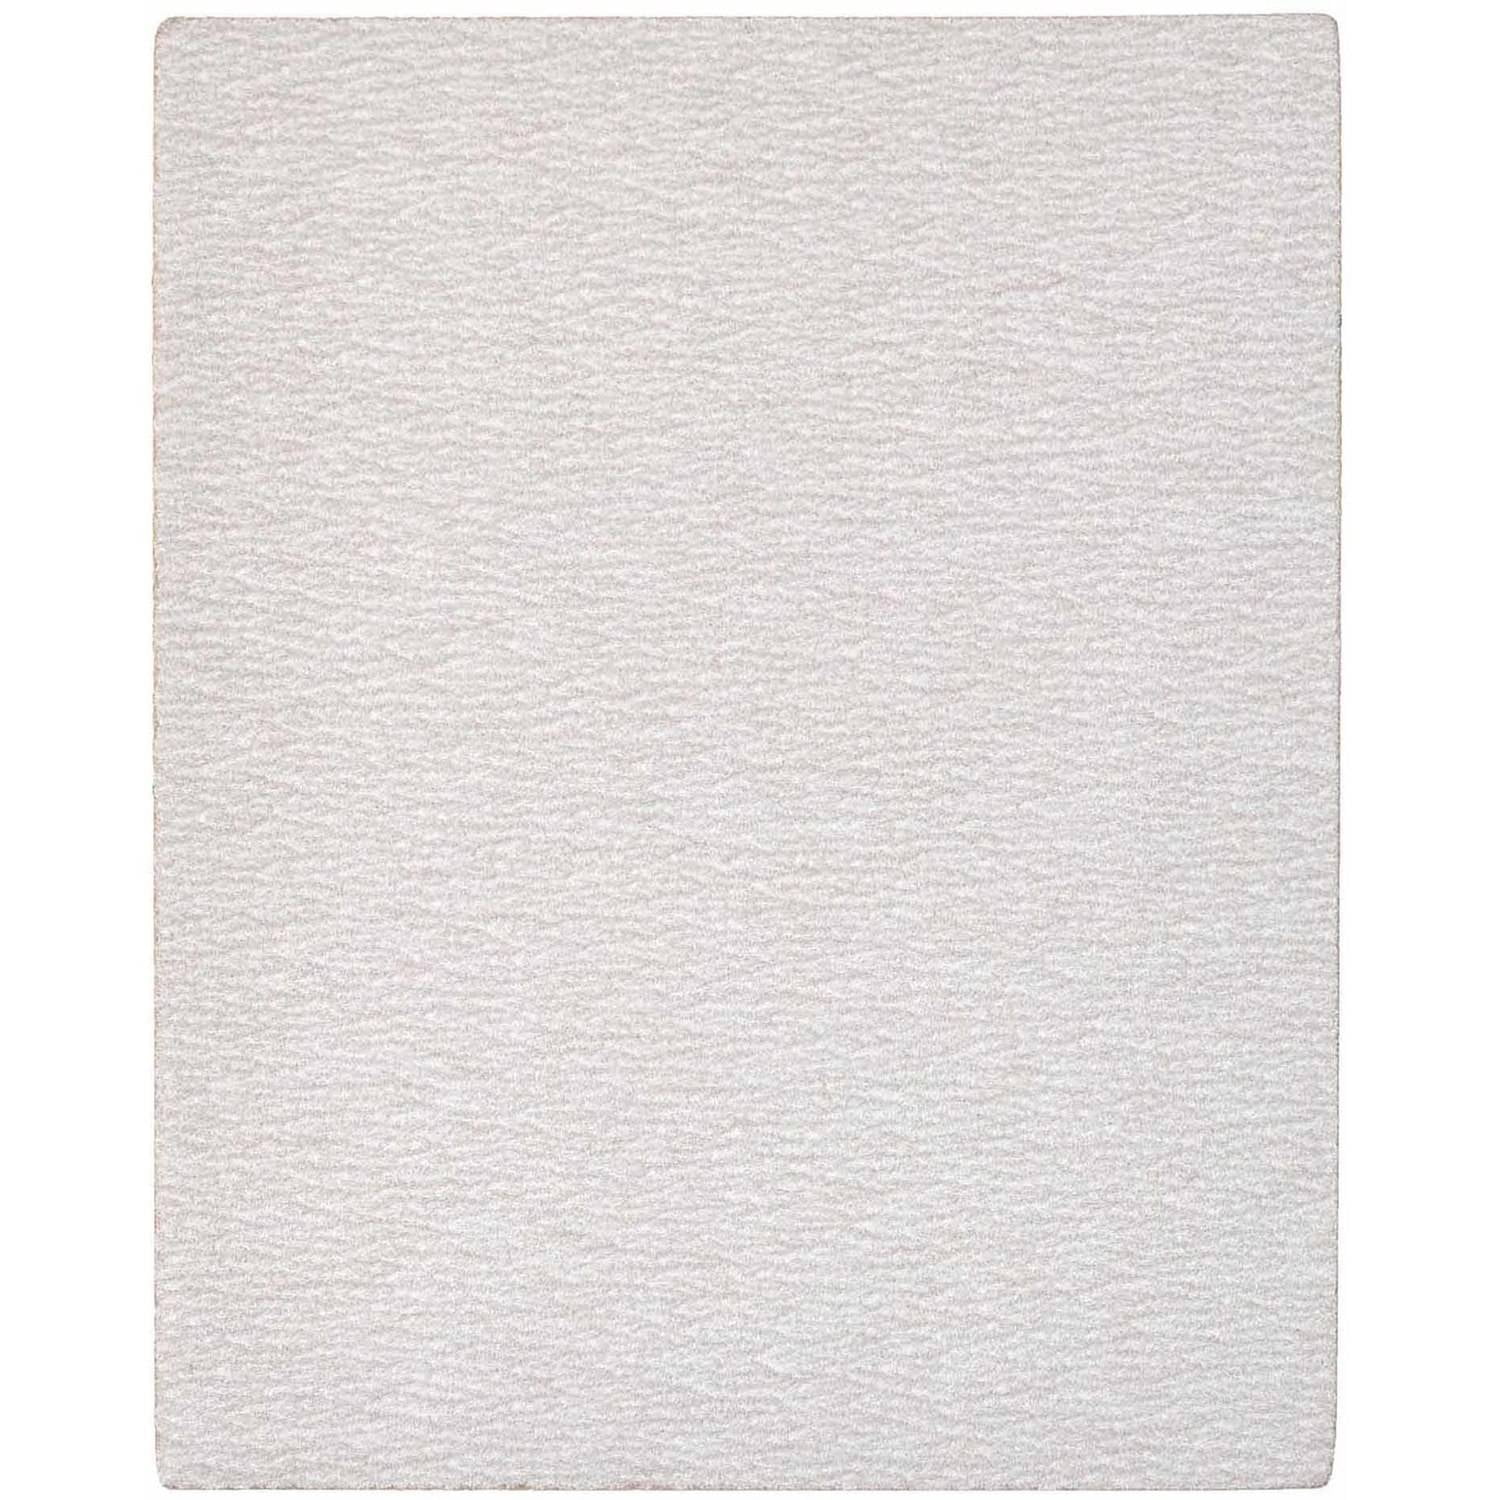 ALEKO 180 Grit Sandpaper Sheets 3.7 x 9 In 10 Pieces Grey Color 